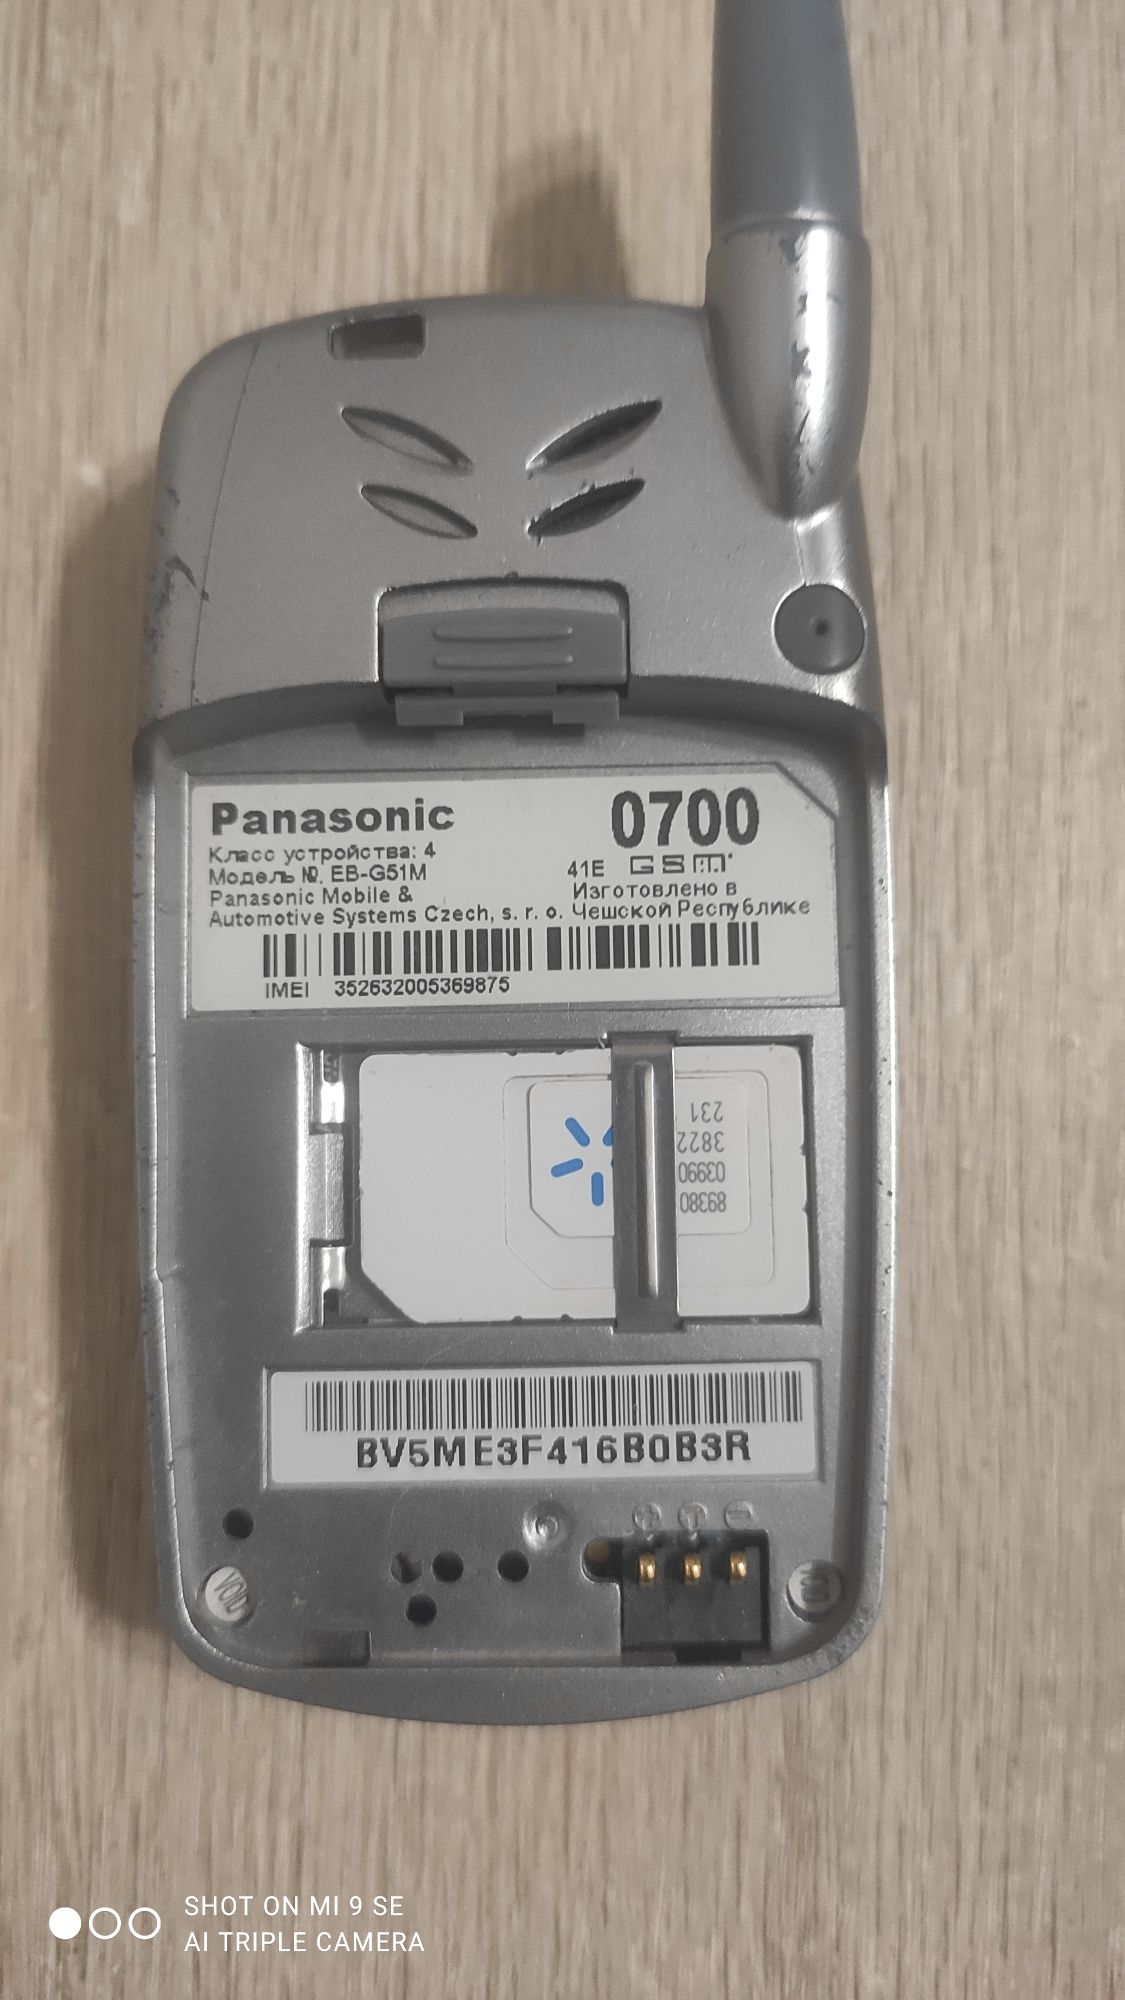 Panasonic eb g51m